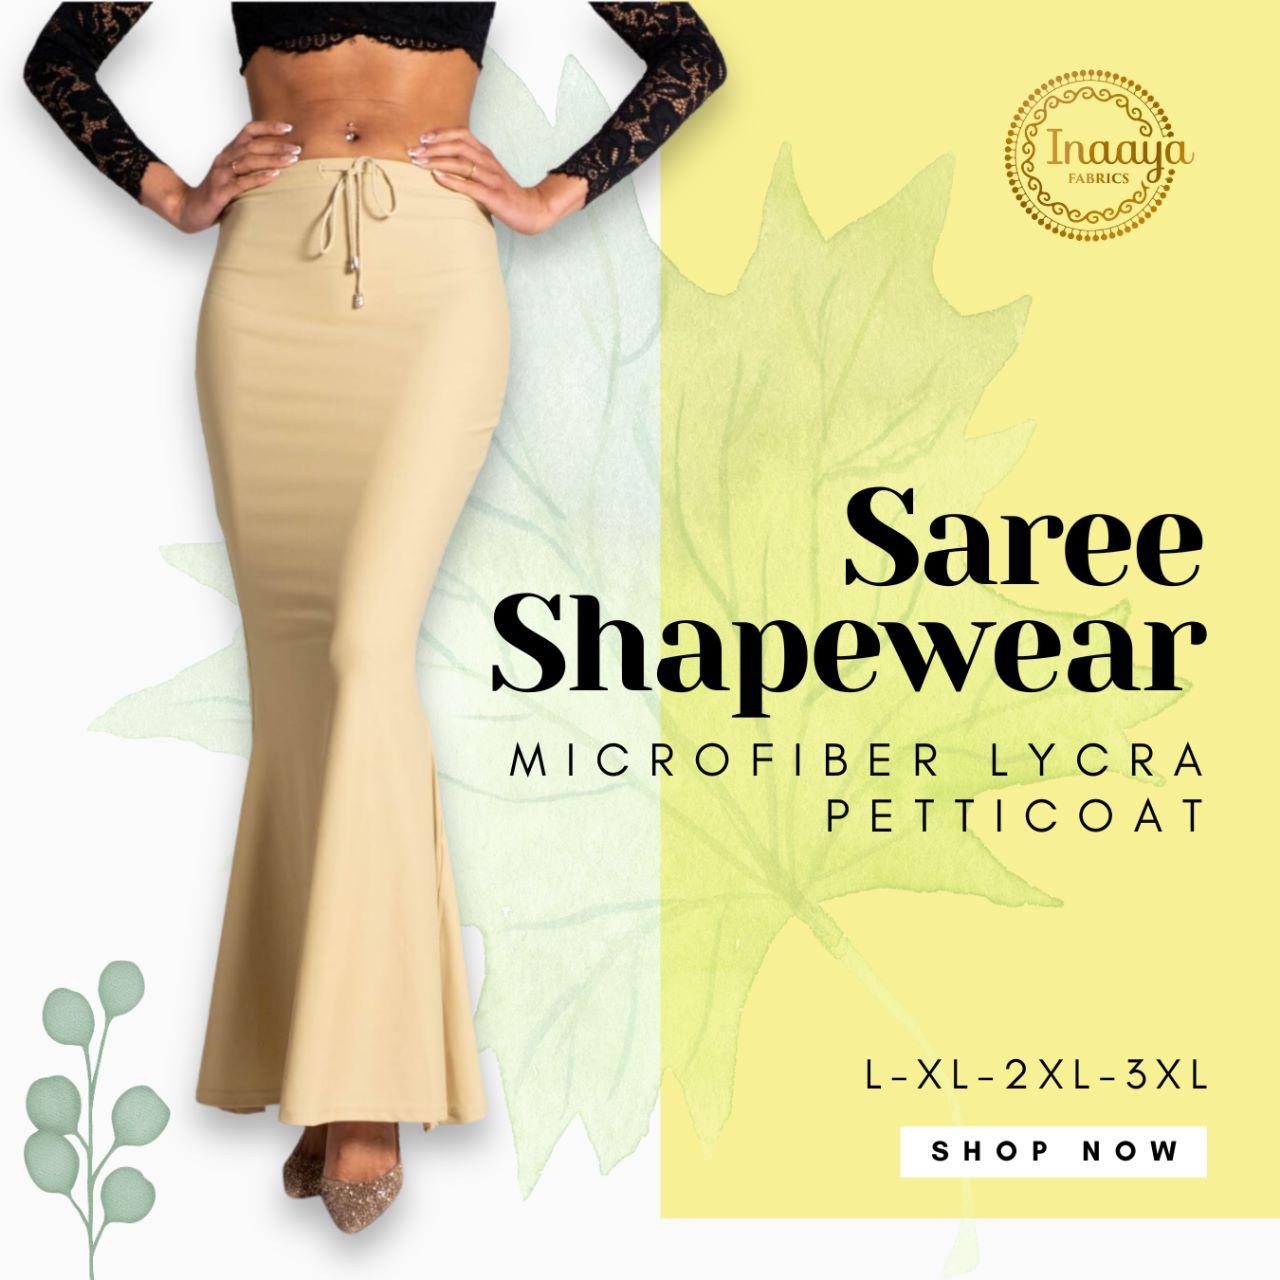 Saree Shapewear Microfiber Lycra Petticoat Black L